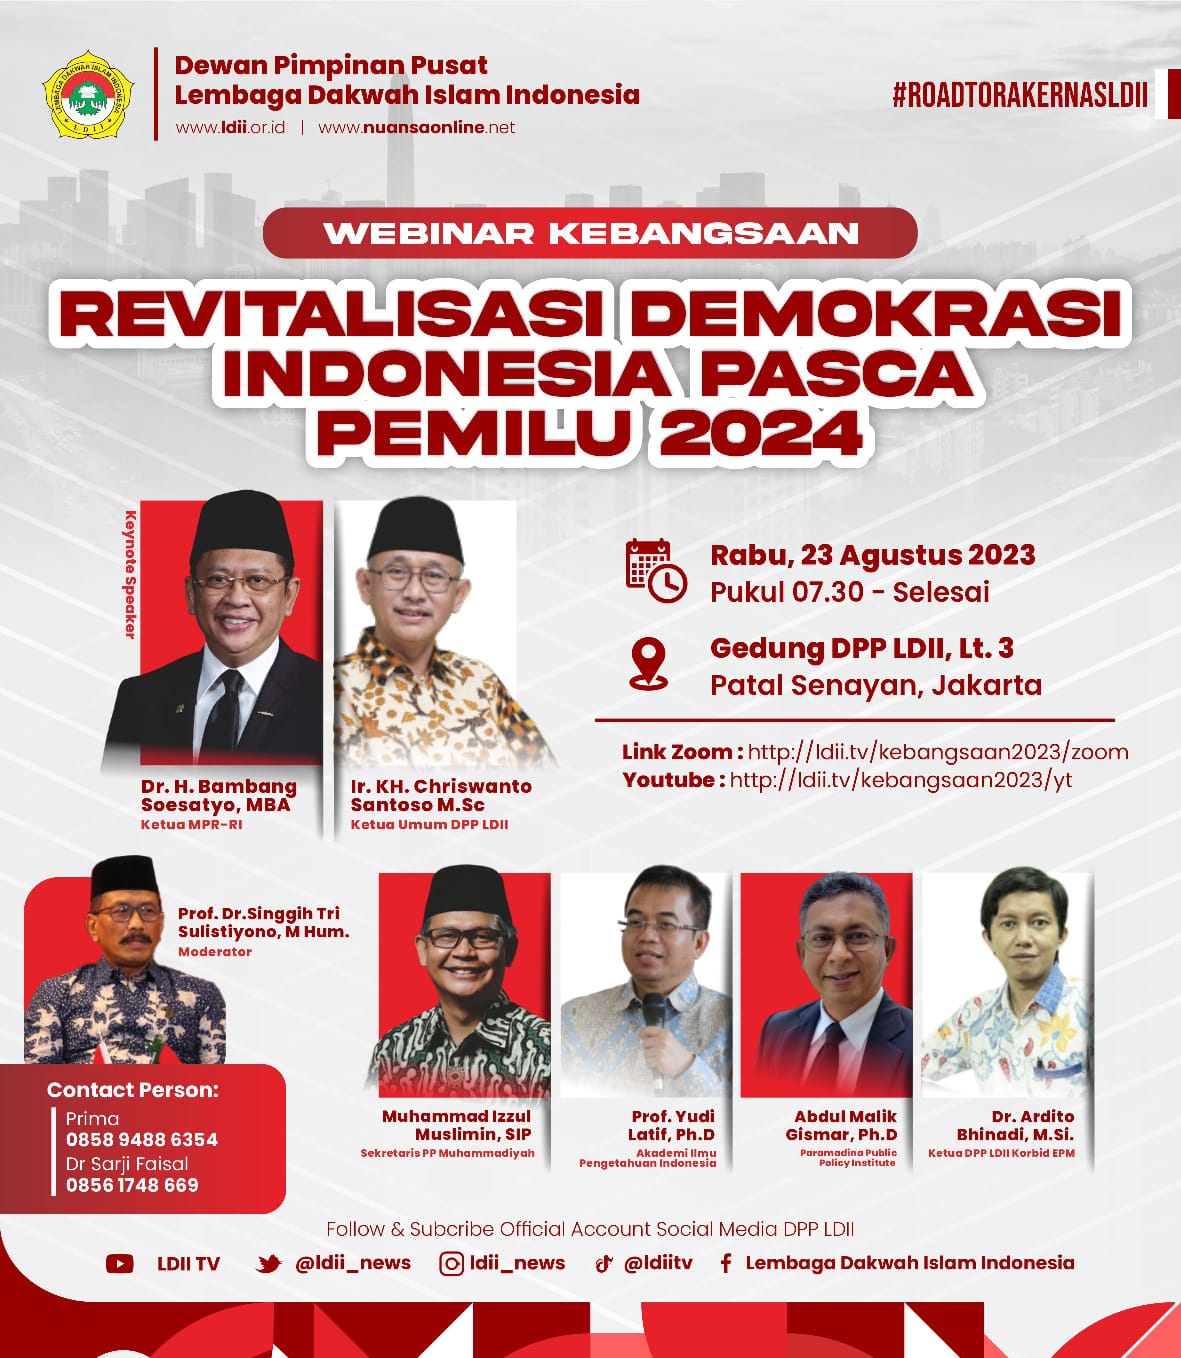 Webinar Kebangsaan, Revitalisasi Demokrasi Indonesia Pasca Pemilu 2024